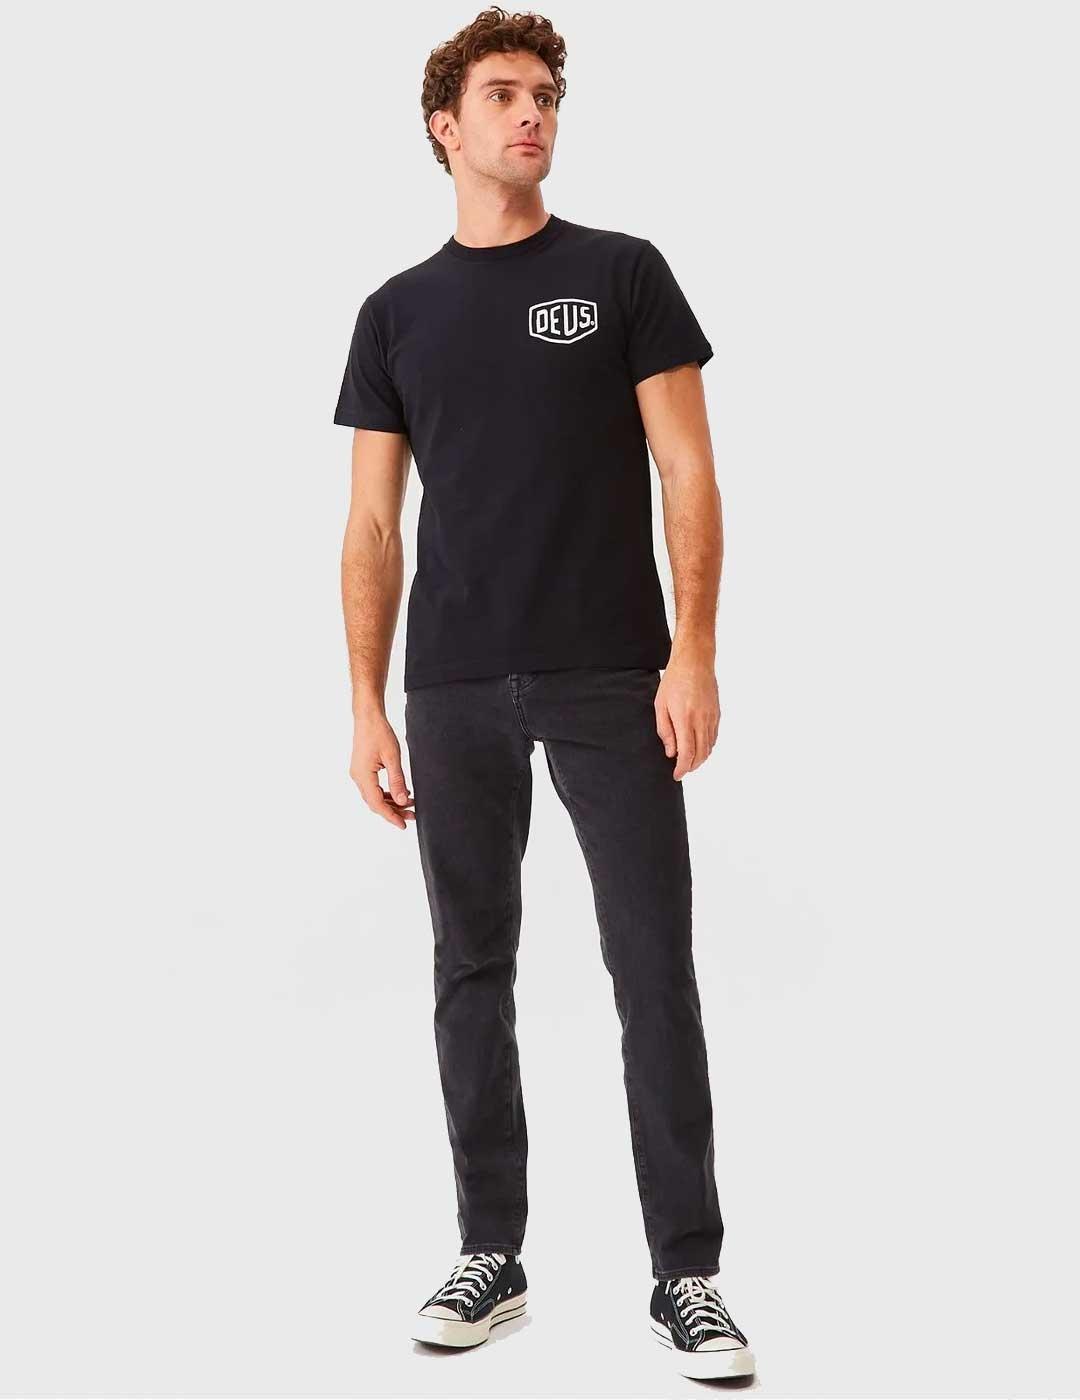 Camiseta Deus Ex Machina Berlin Address negra para hombre